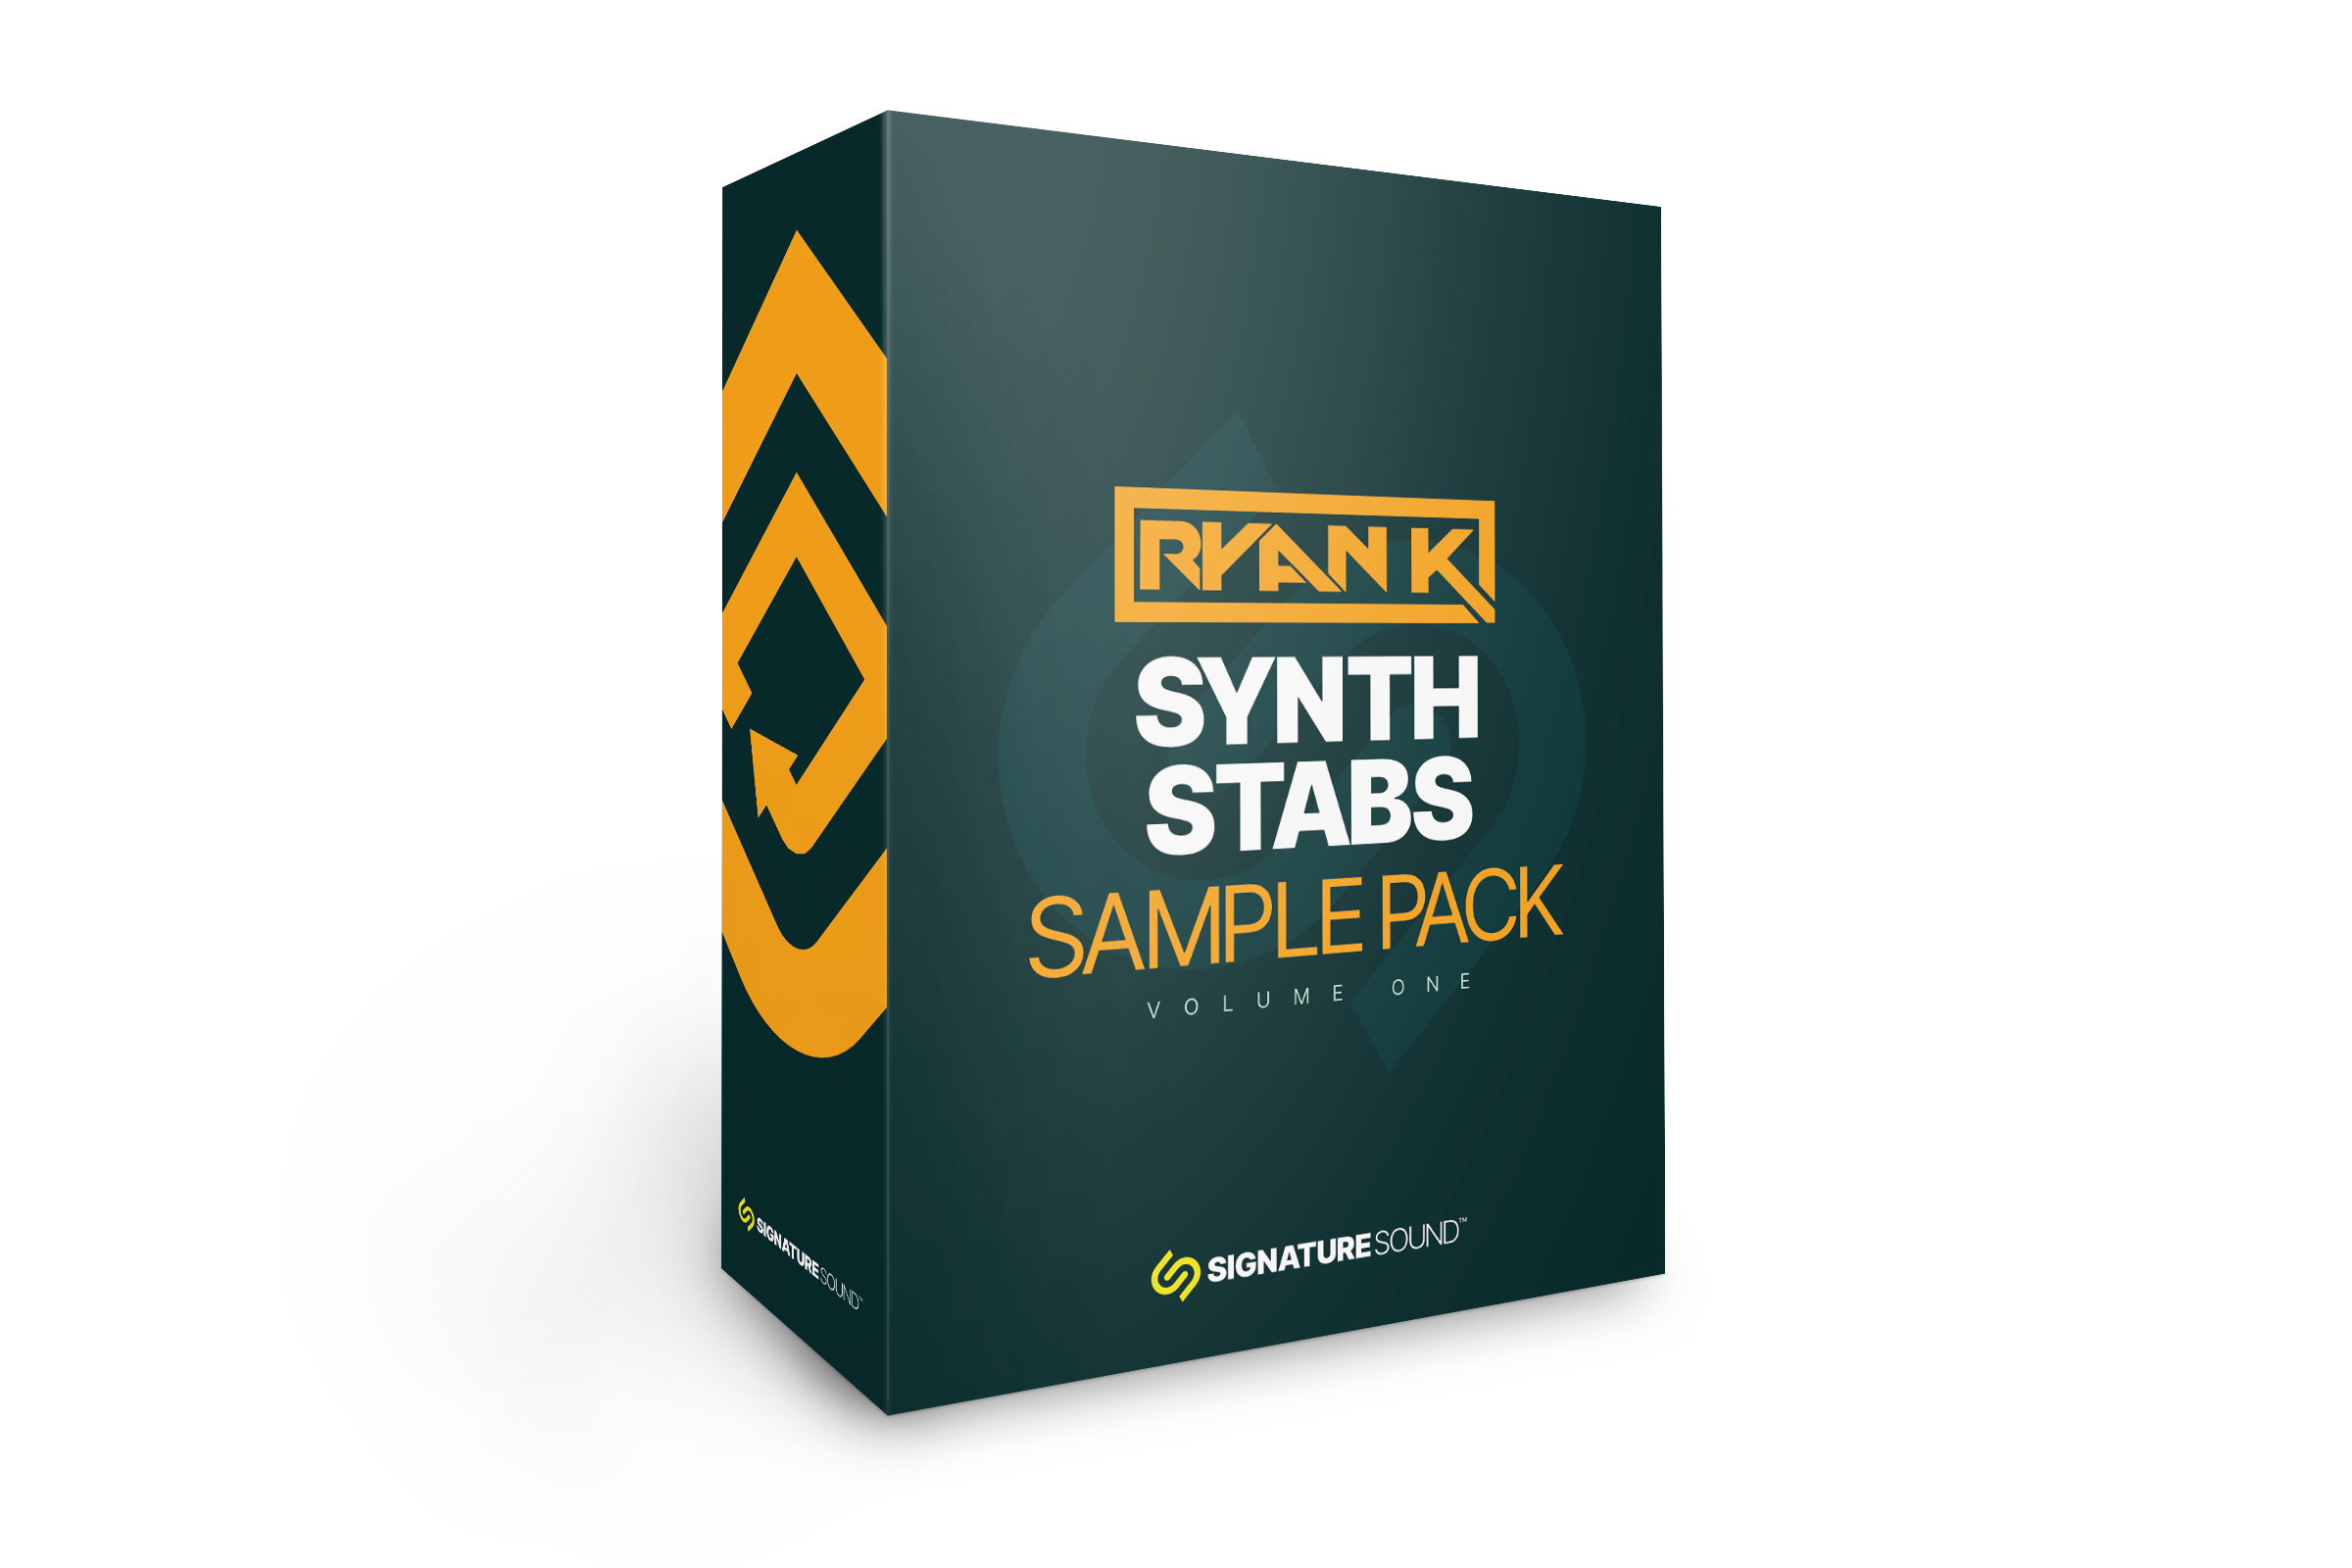 Ryan K Synth Stabs [Sample Pack] Volume One